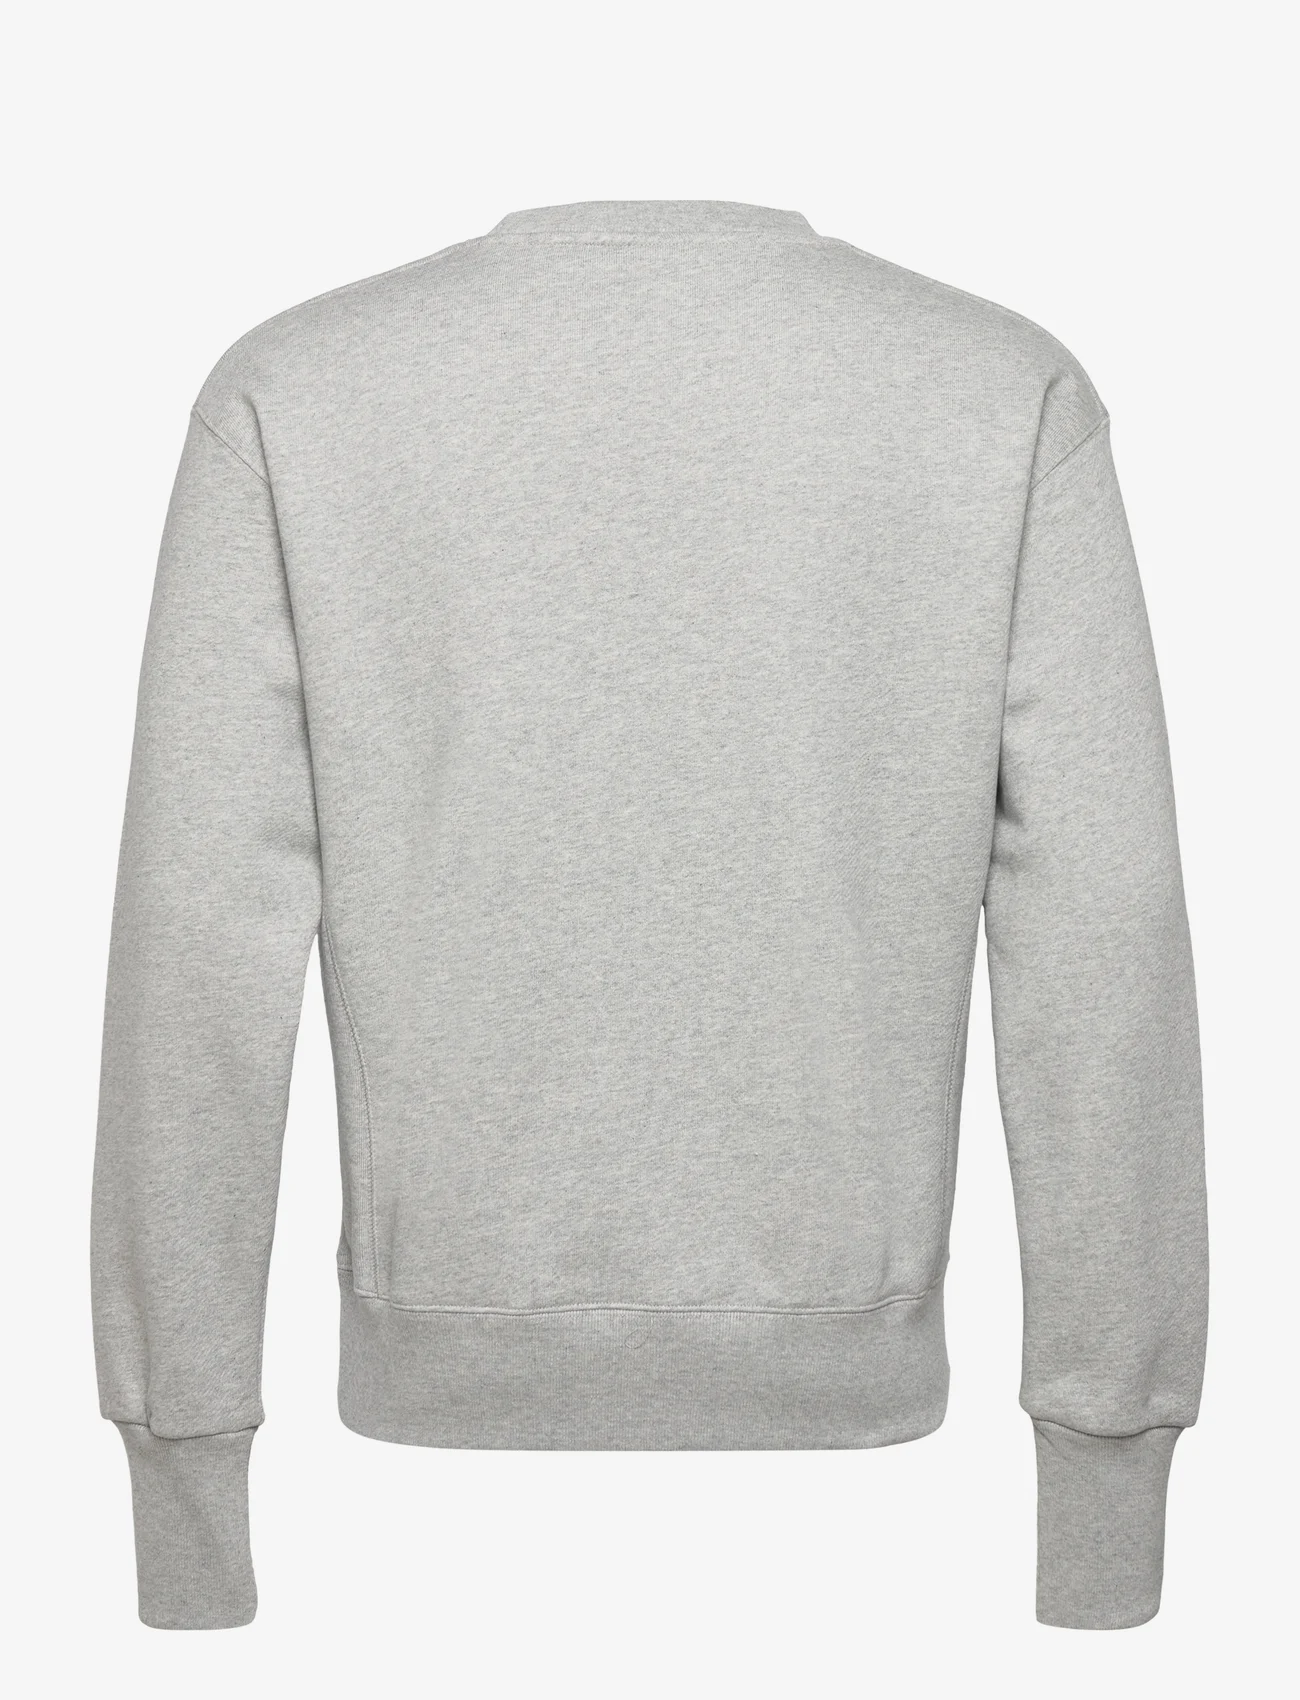 Soulland - Flower Logo sweatshirt - sweatshirts - grey melange - 1